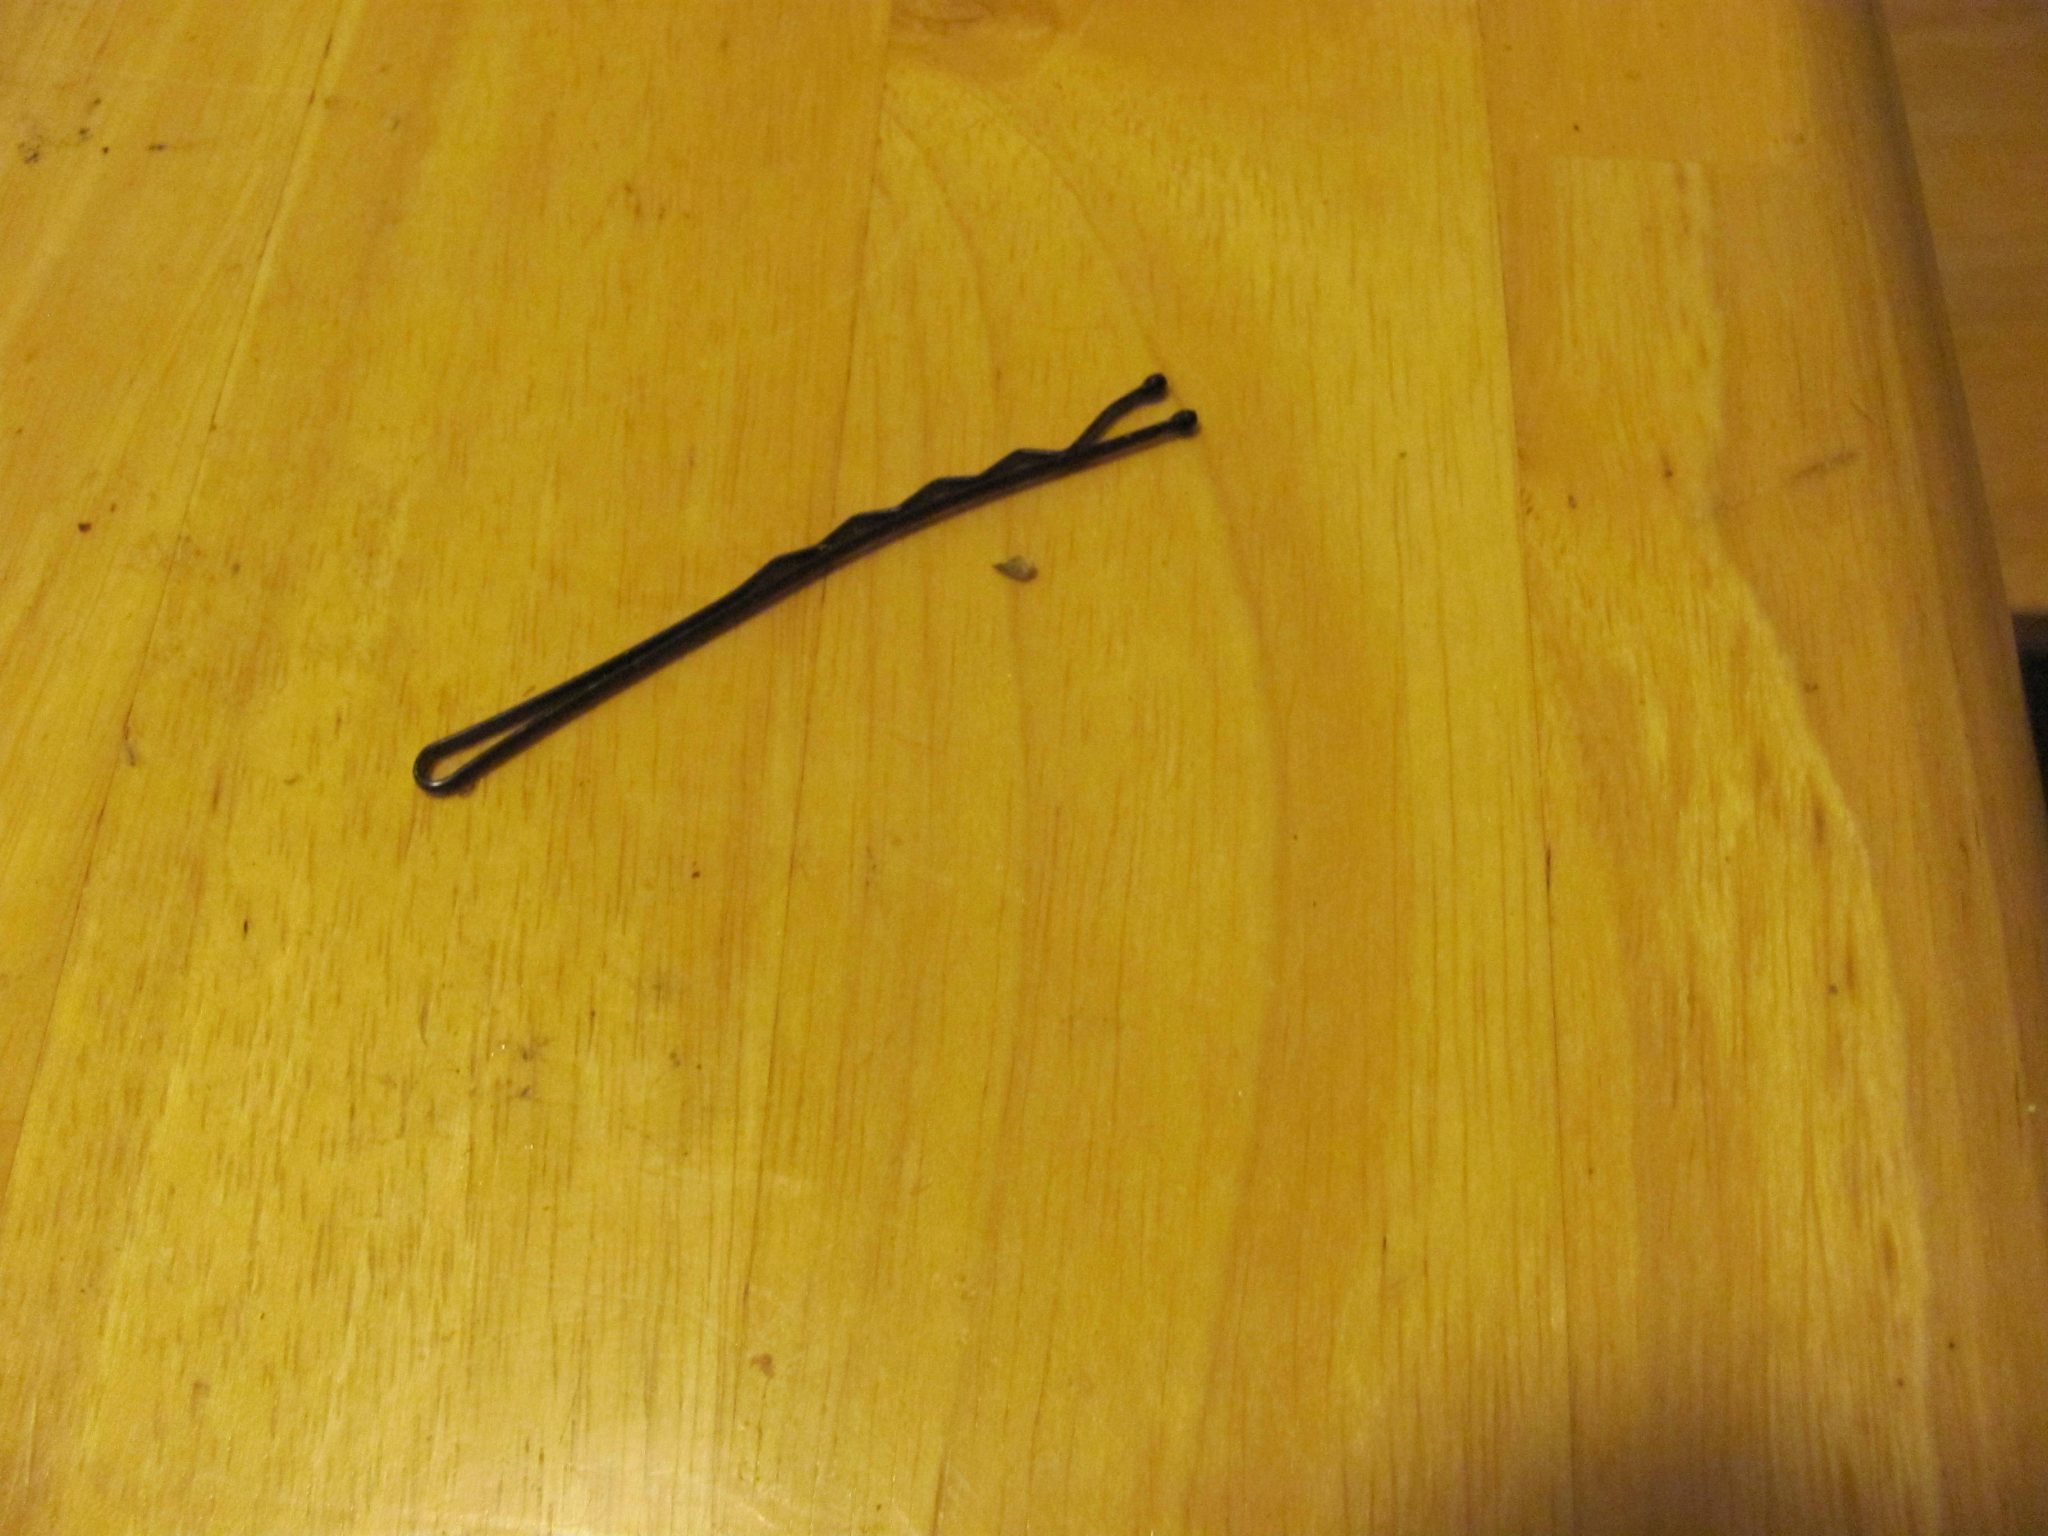 ldr partner left a hair clip behind